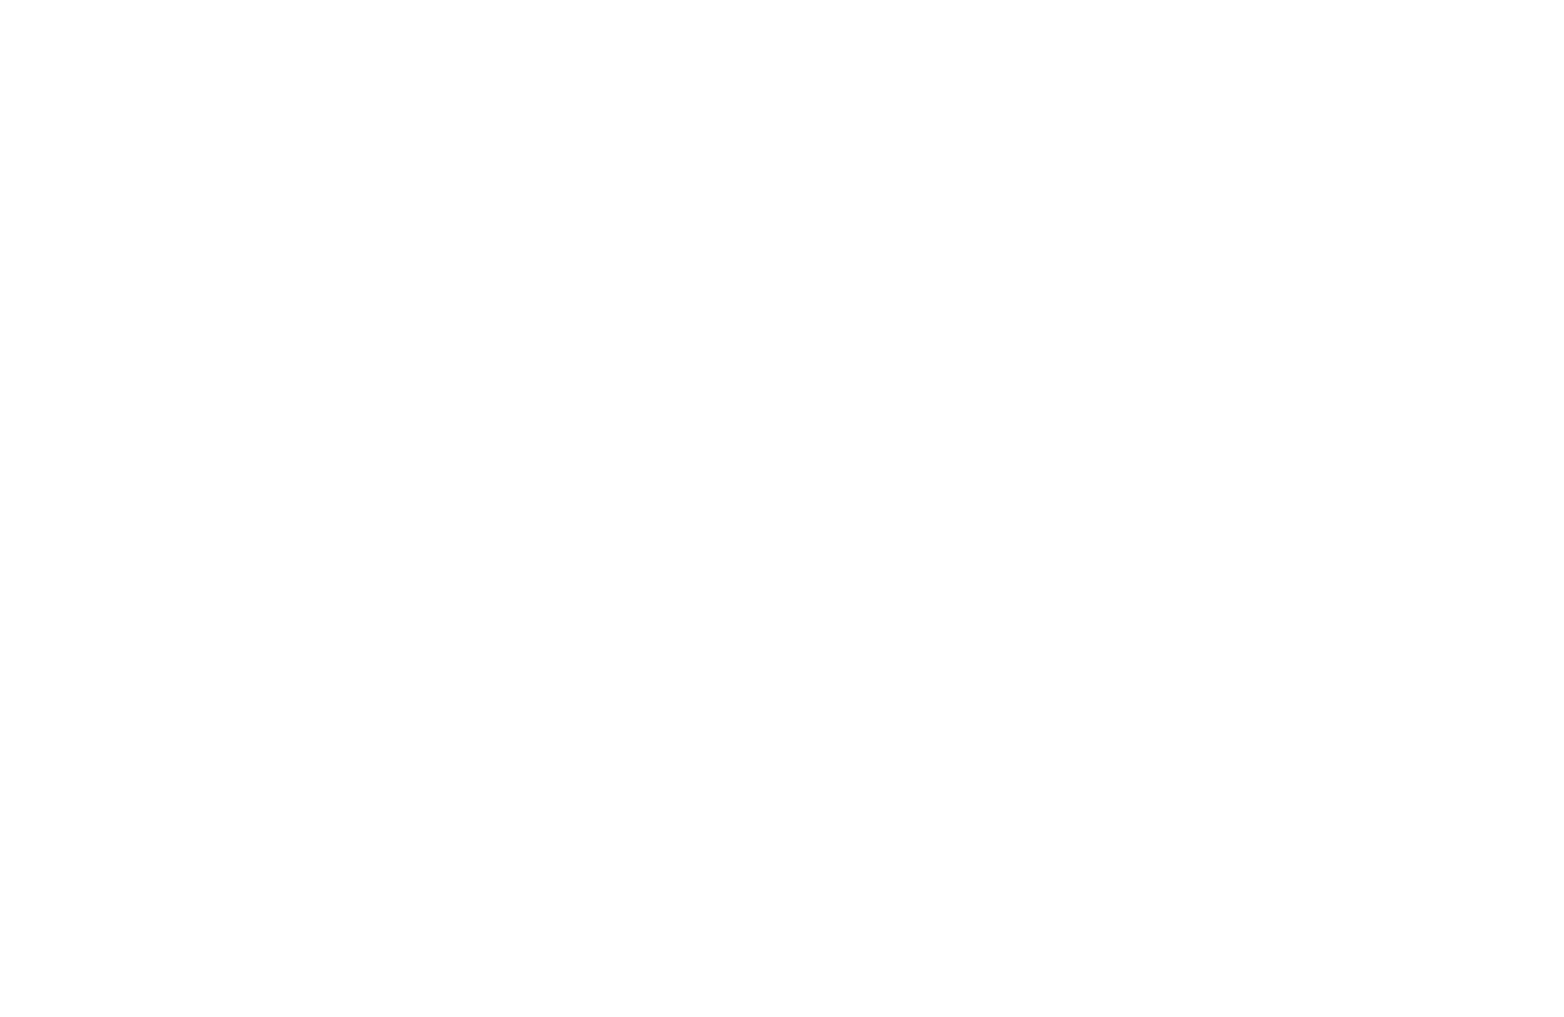 Immobel logo grand pour les fonds sombres (PNG transparent)